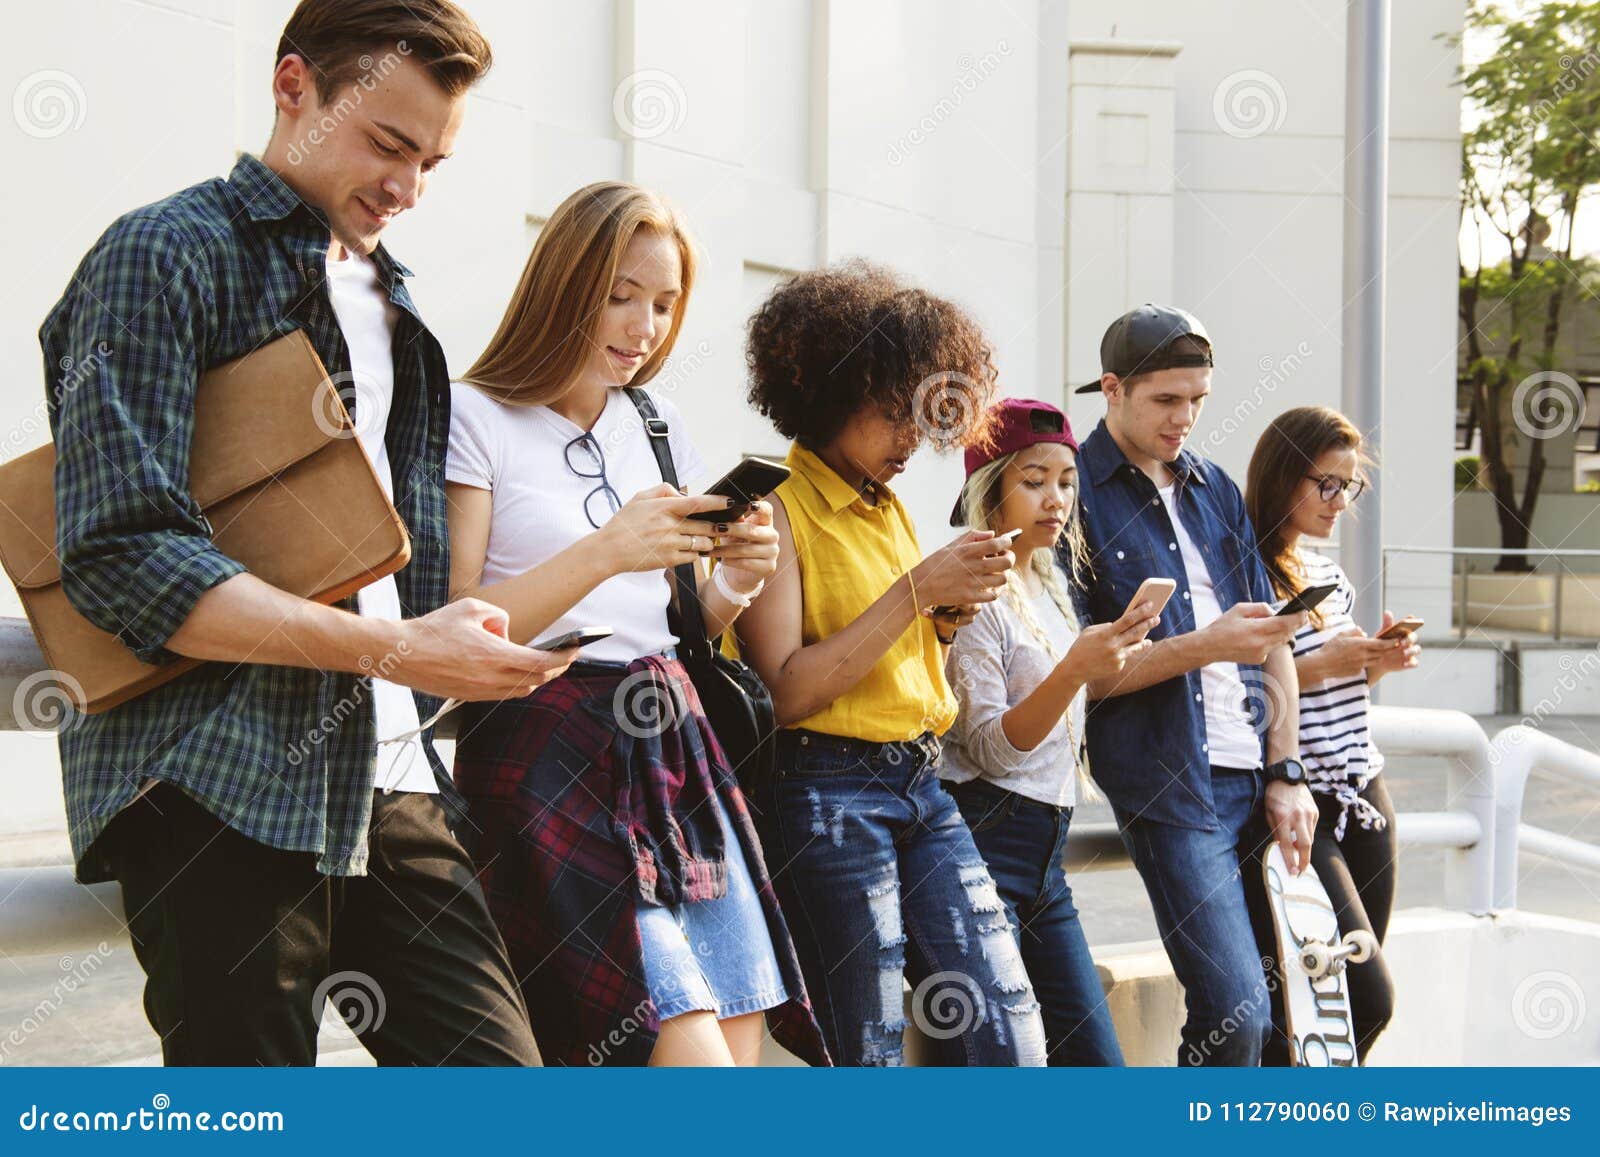 millennials using smartphones outdoors together